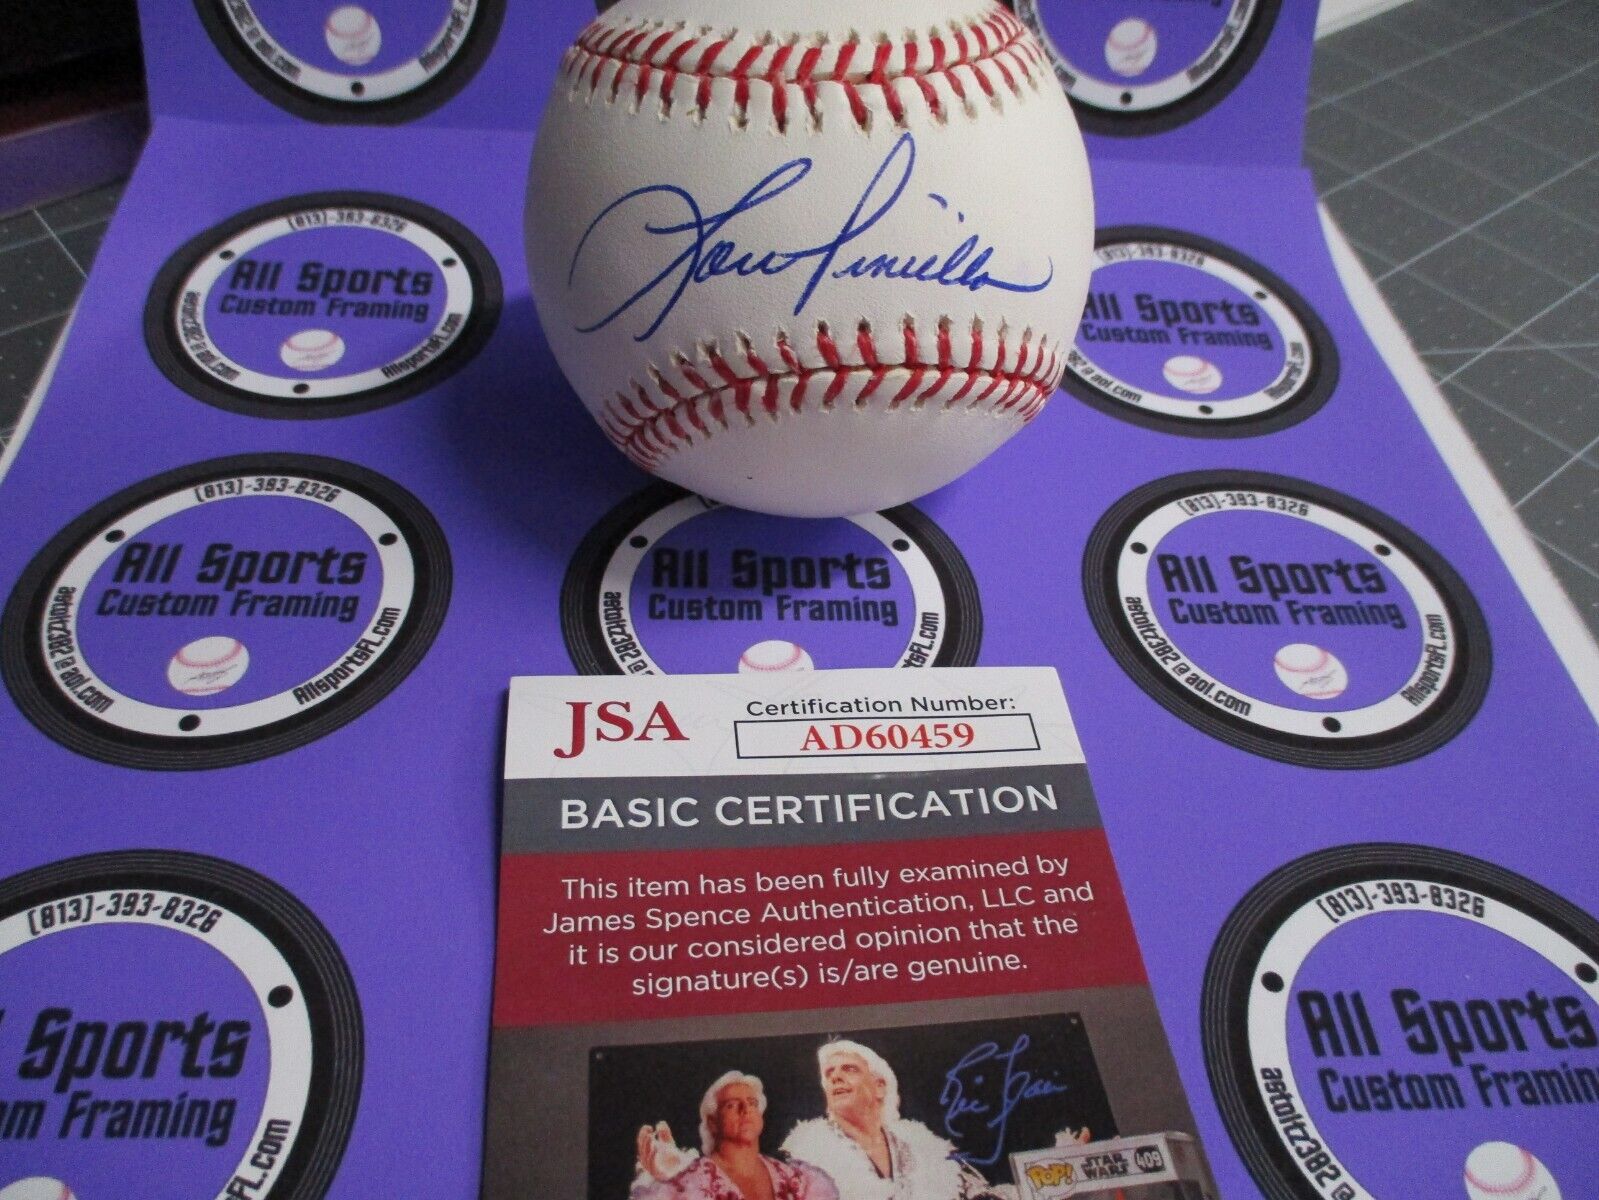 Lou Piniella Autographed Baseball New York Yankees JSA #AD60459 NICE clean ball